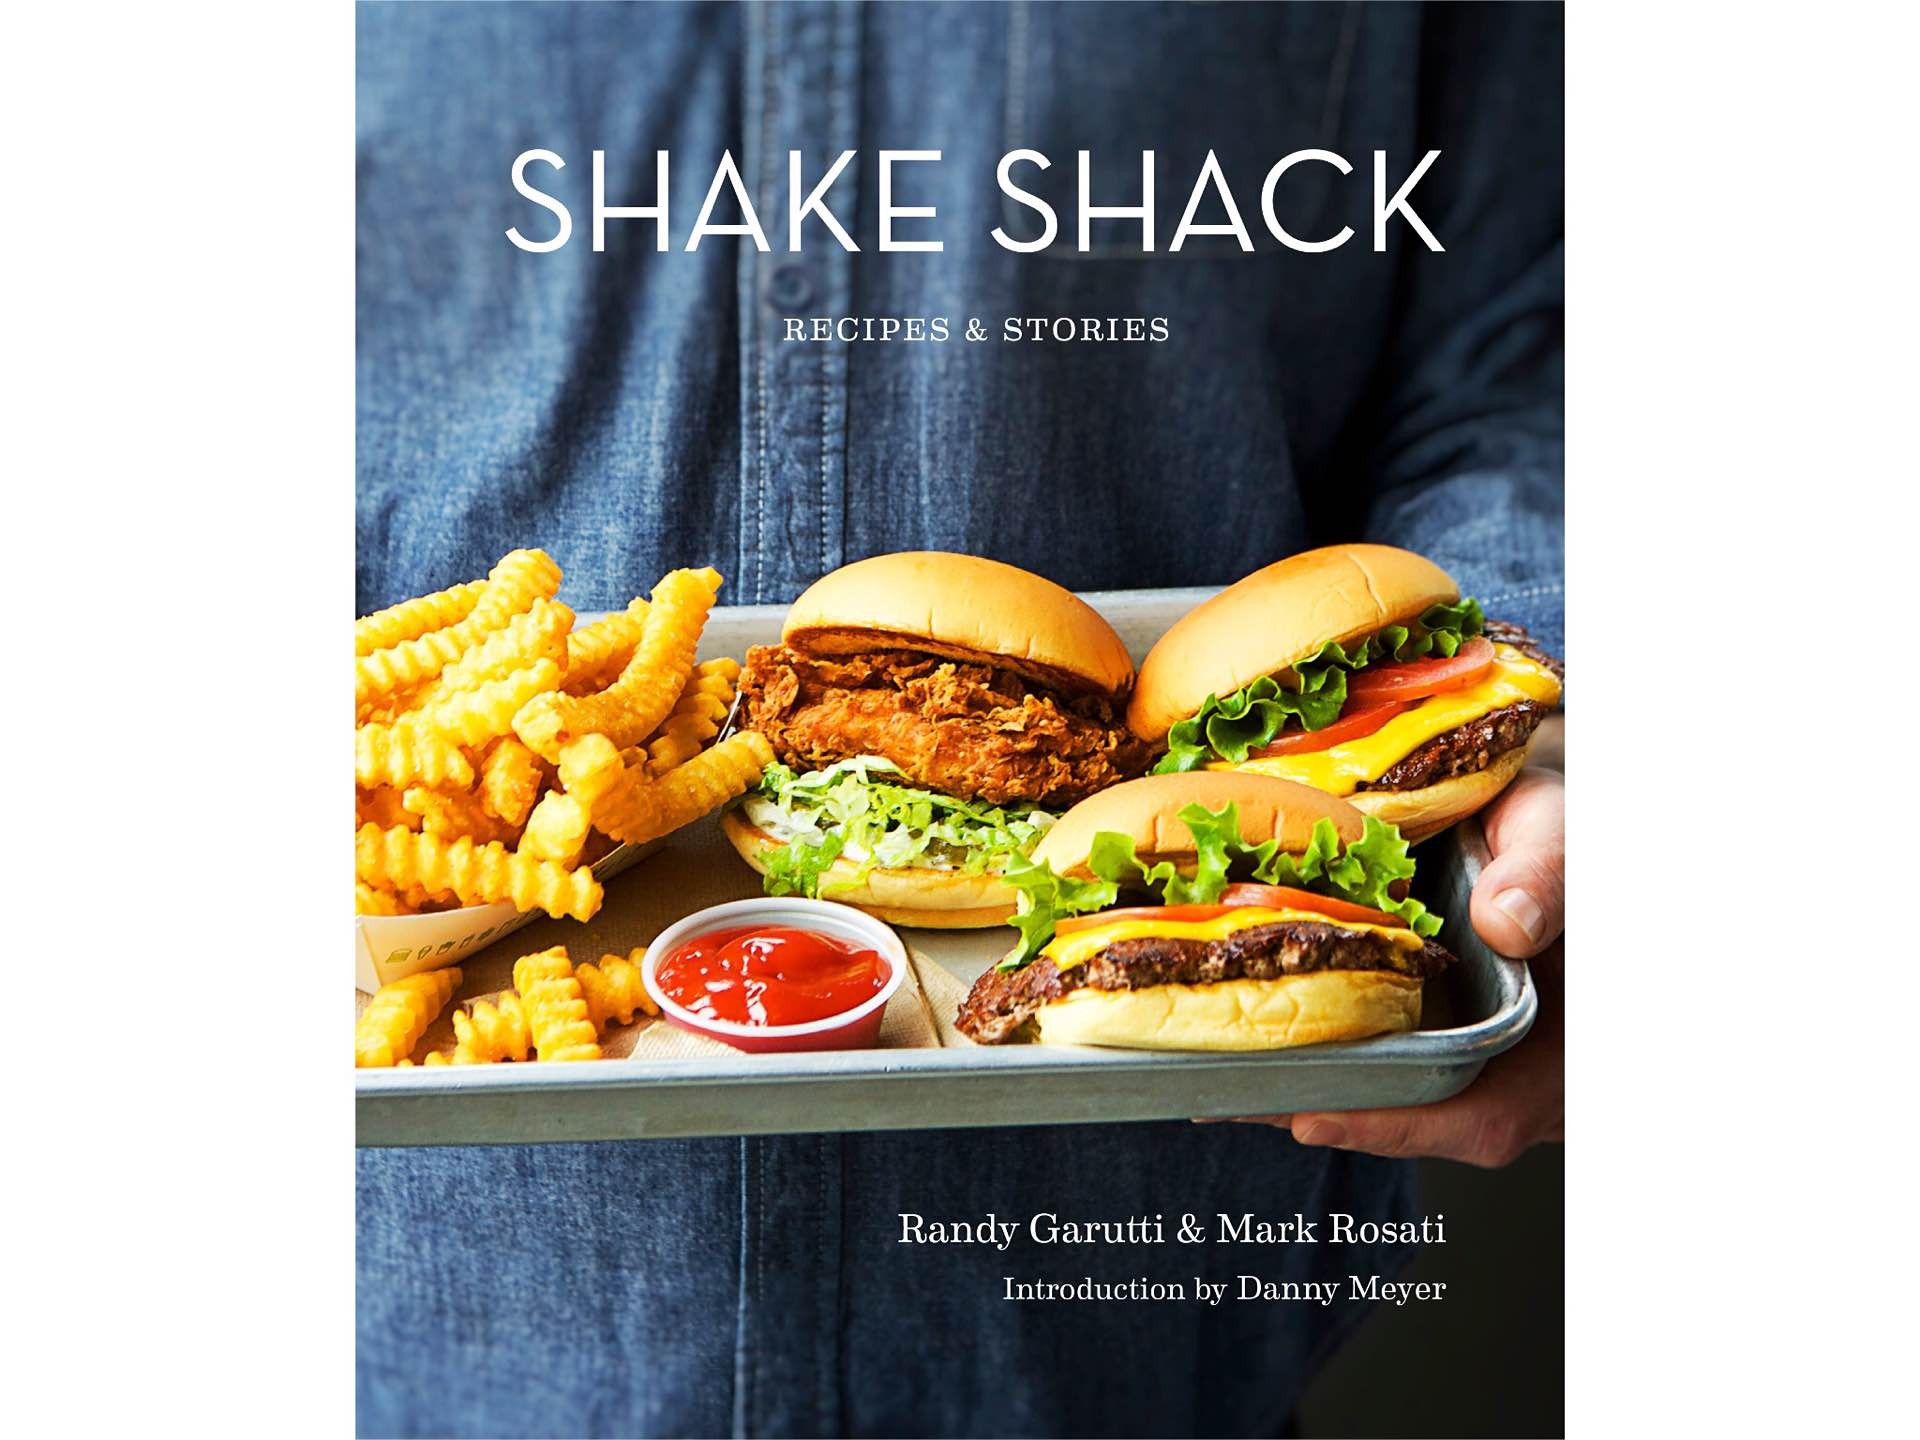 Shake Shack: Stories & Recipes by Randy Garutti, Mark Rosati, and Dorothy Kalins.